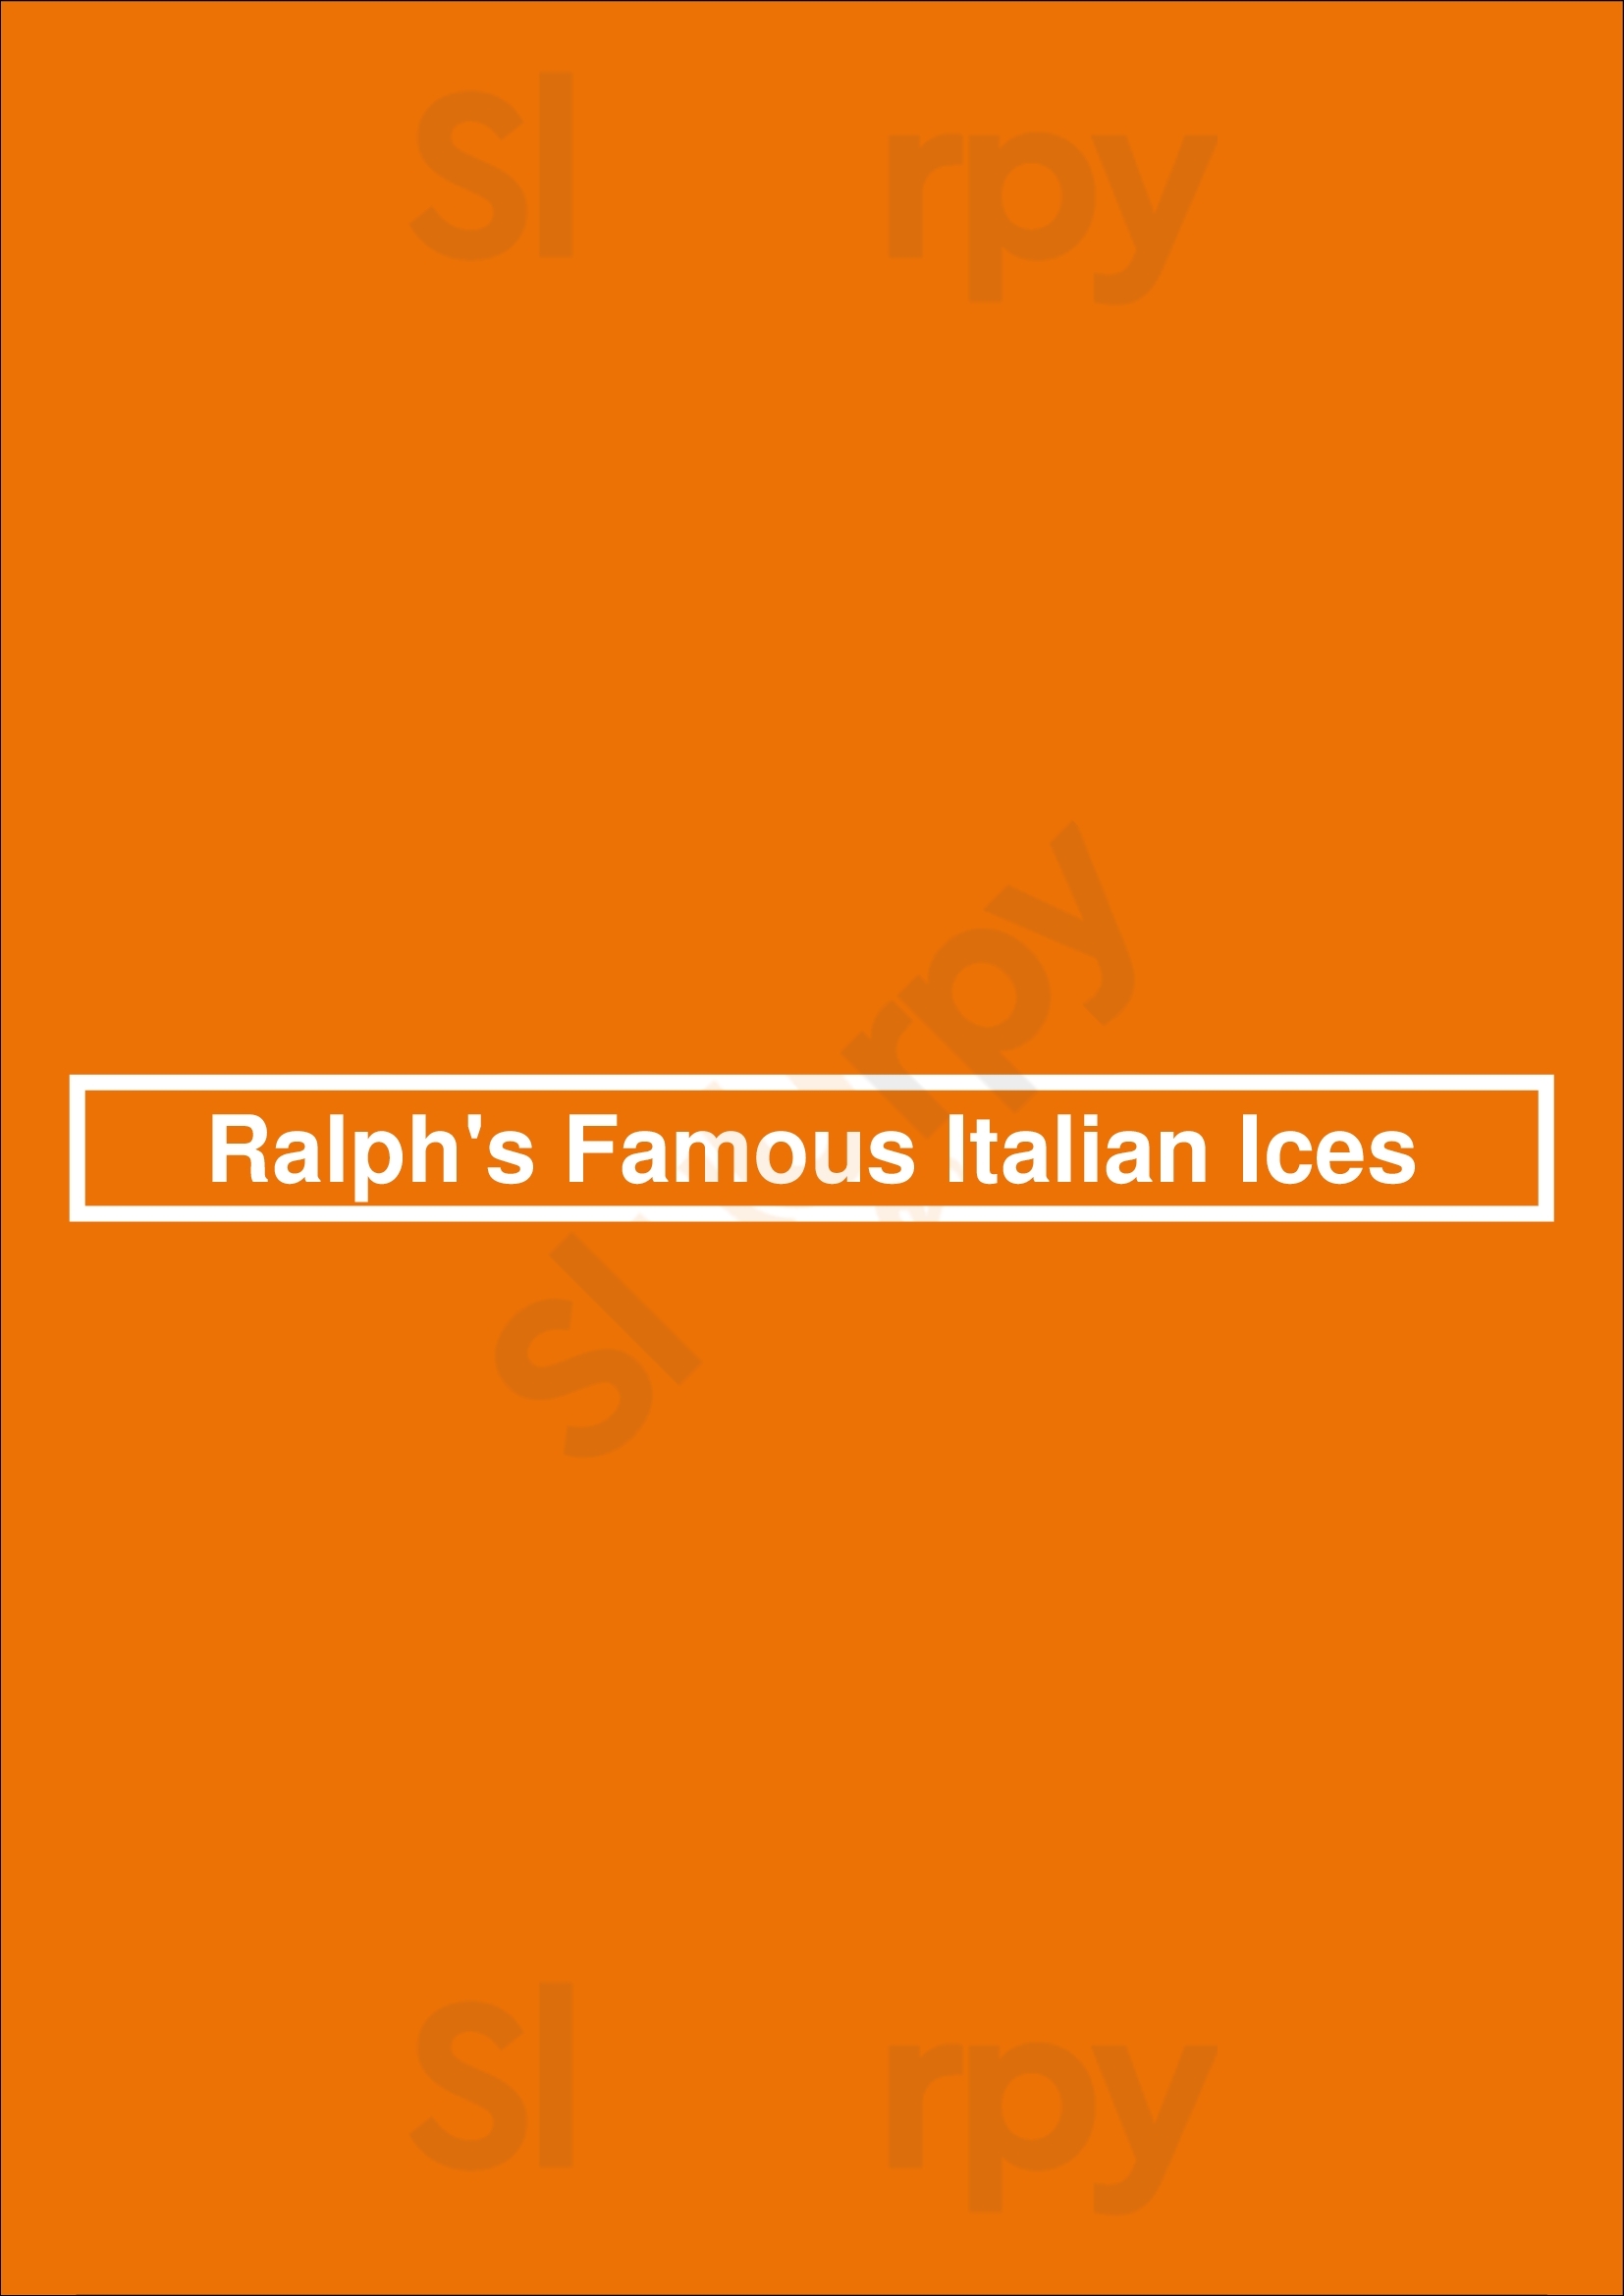 Ralph's Famous Italian Ices Staten Island Menu - 1